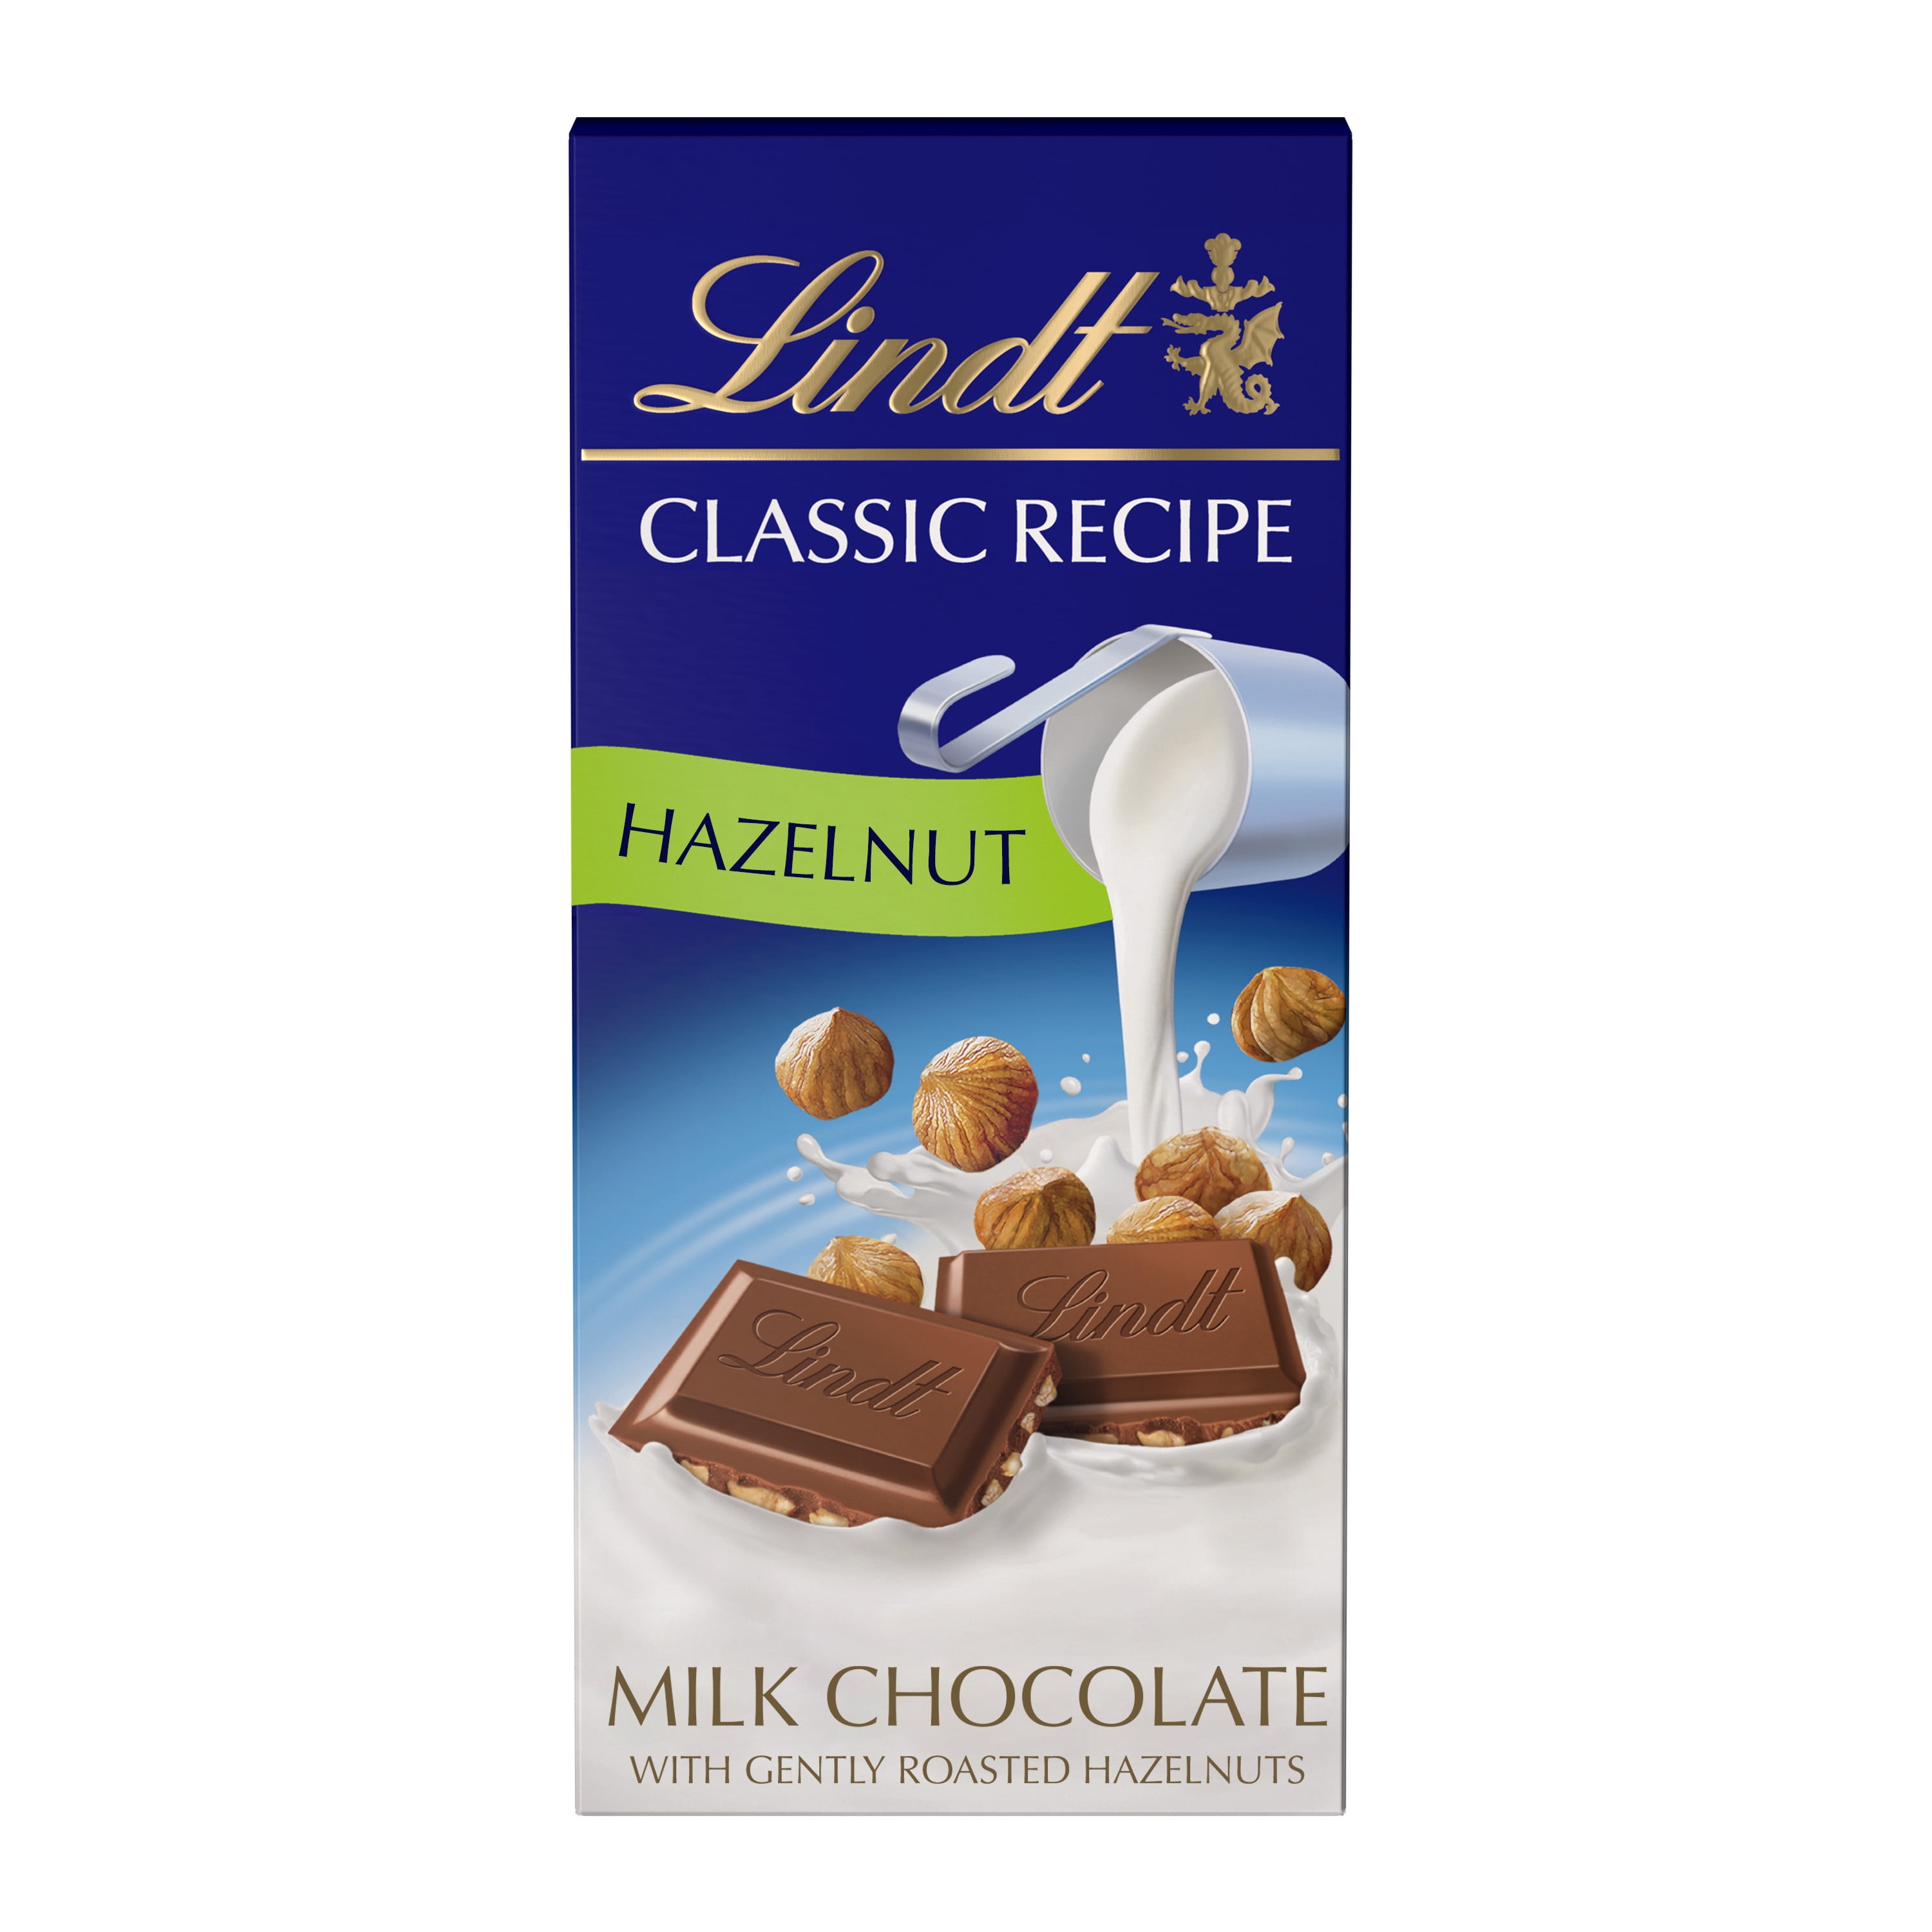 Milk Chocolate LINDOR Bar (3.5 oz)